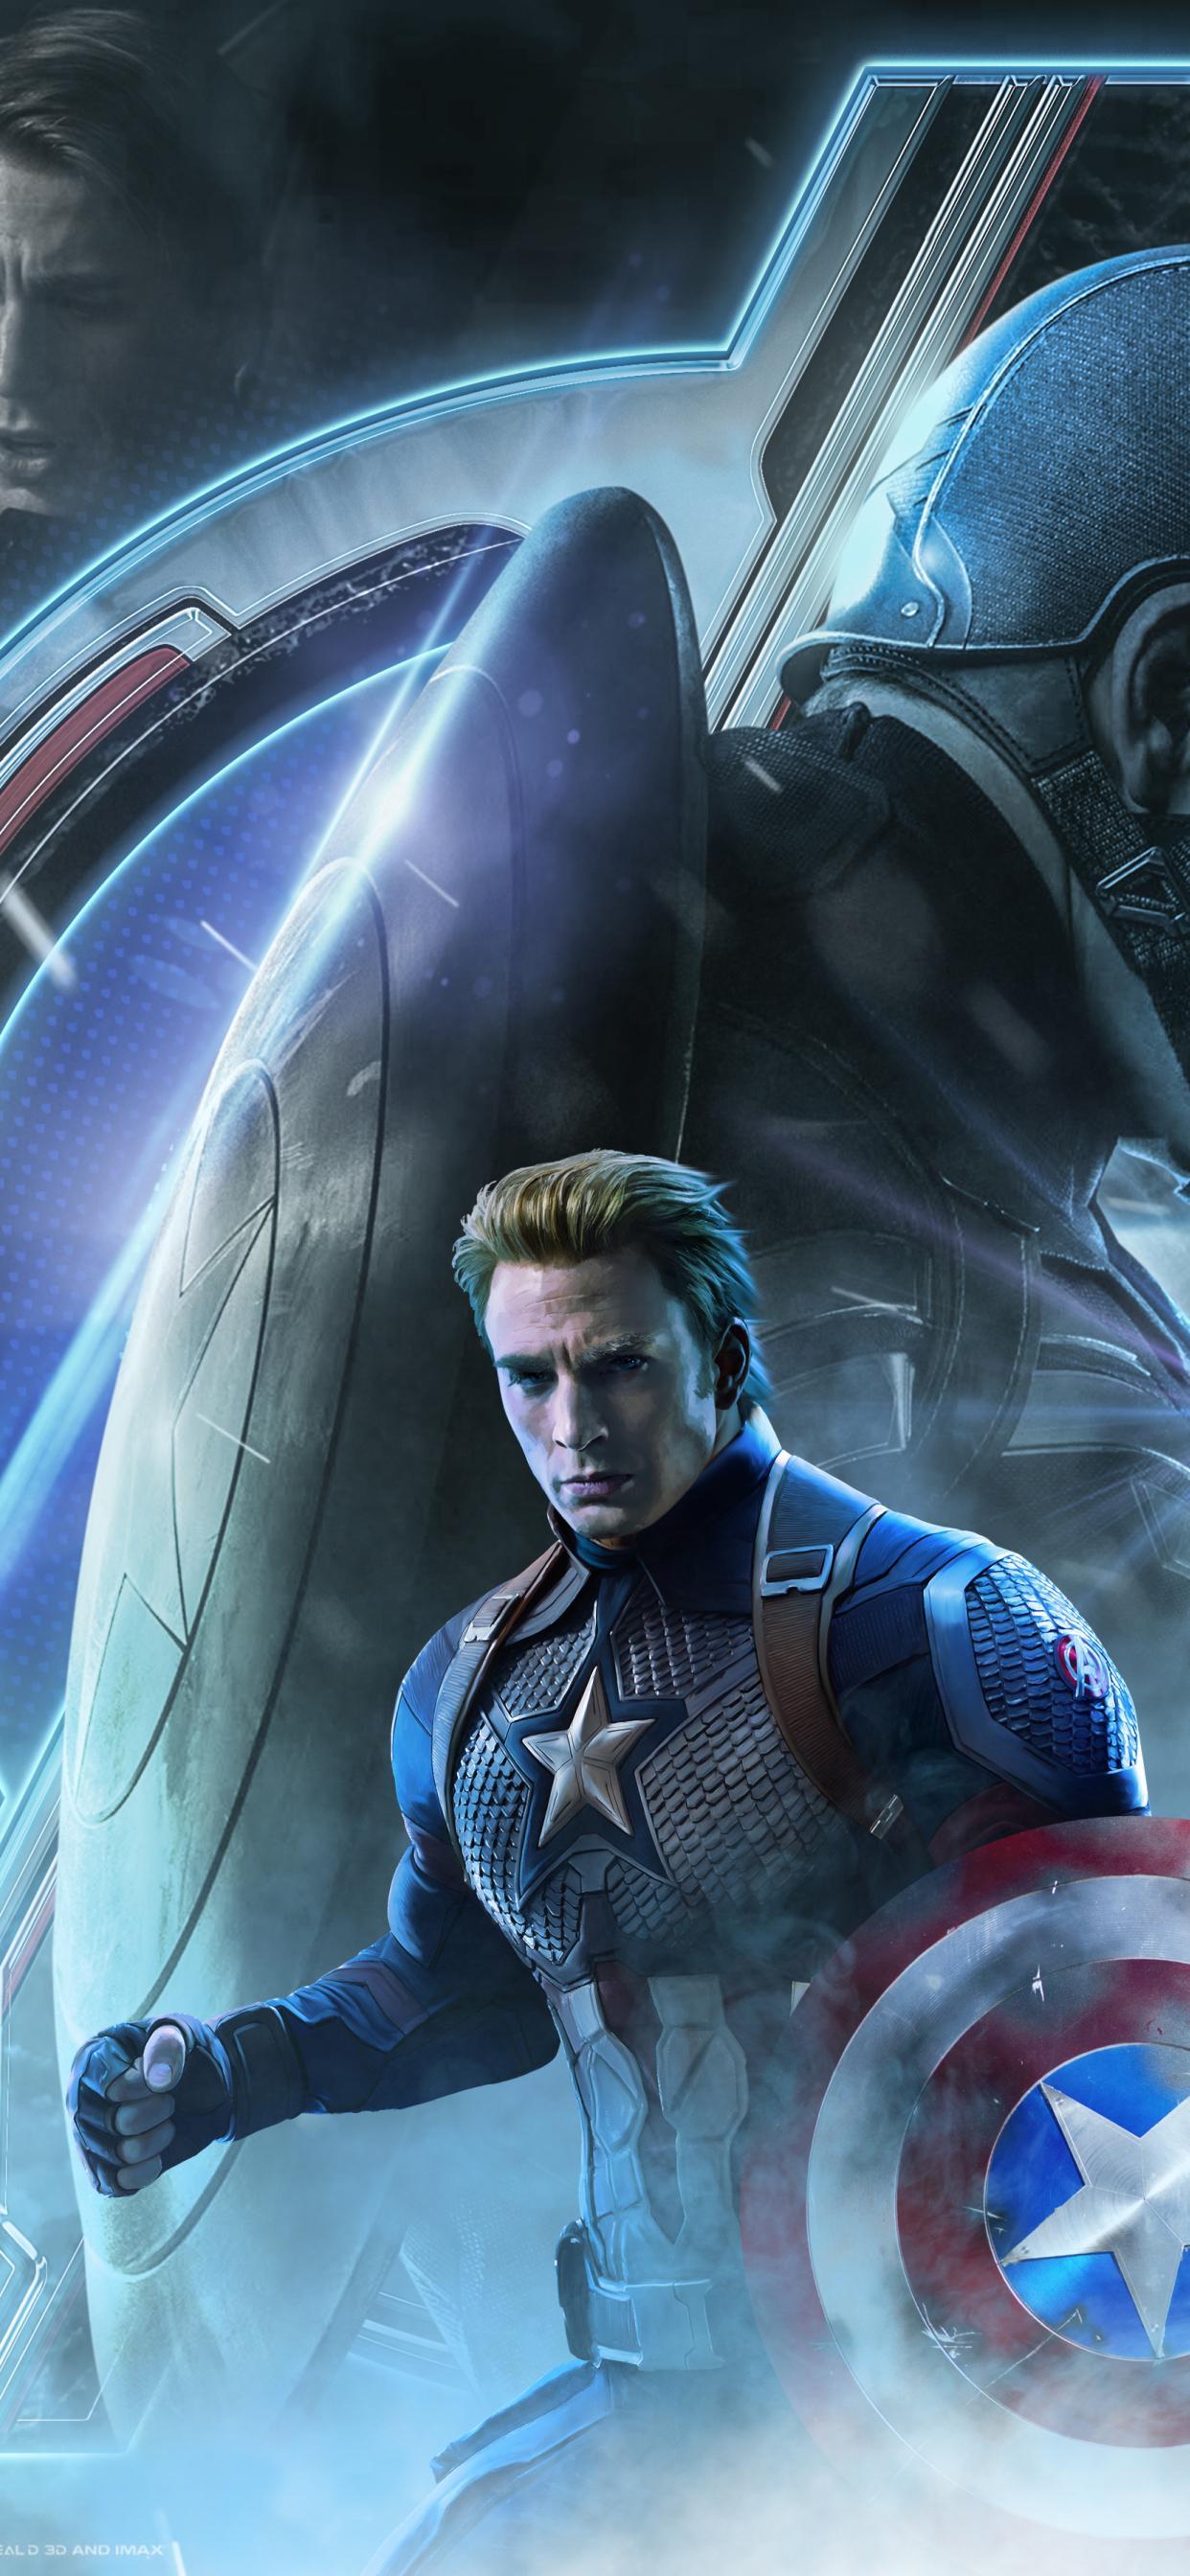 Captain America / Steve Rogers Avengers Endgame character poster Cinematic Universe Photo